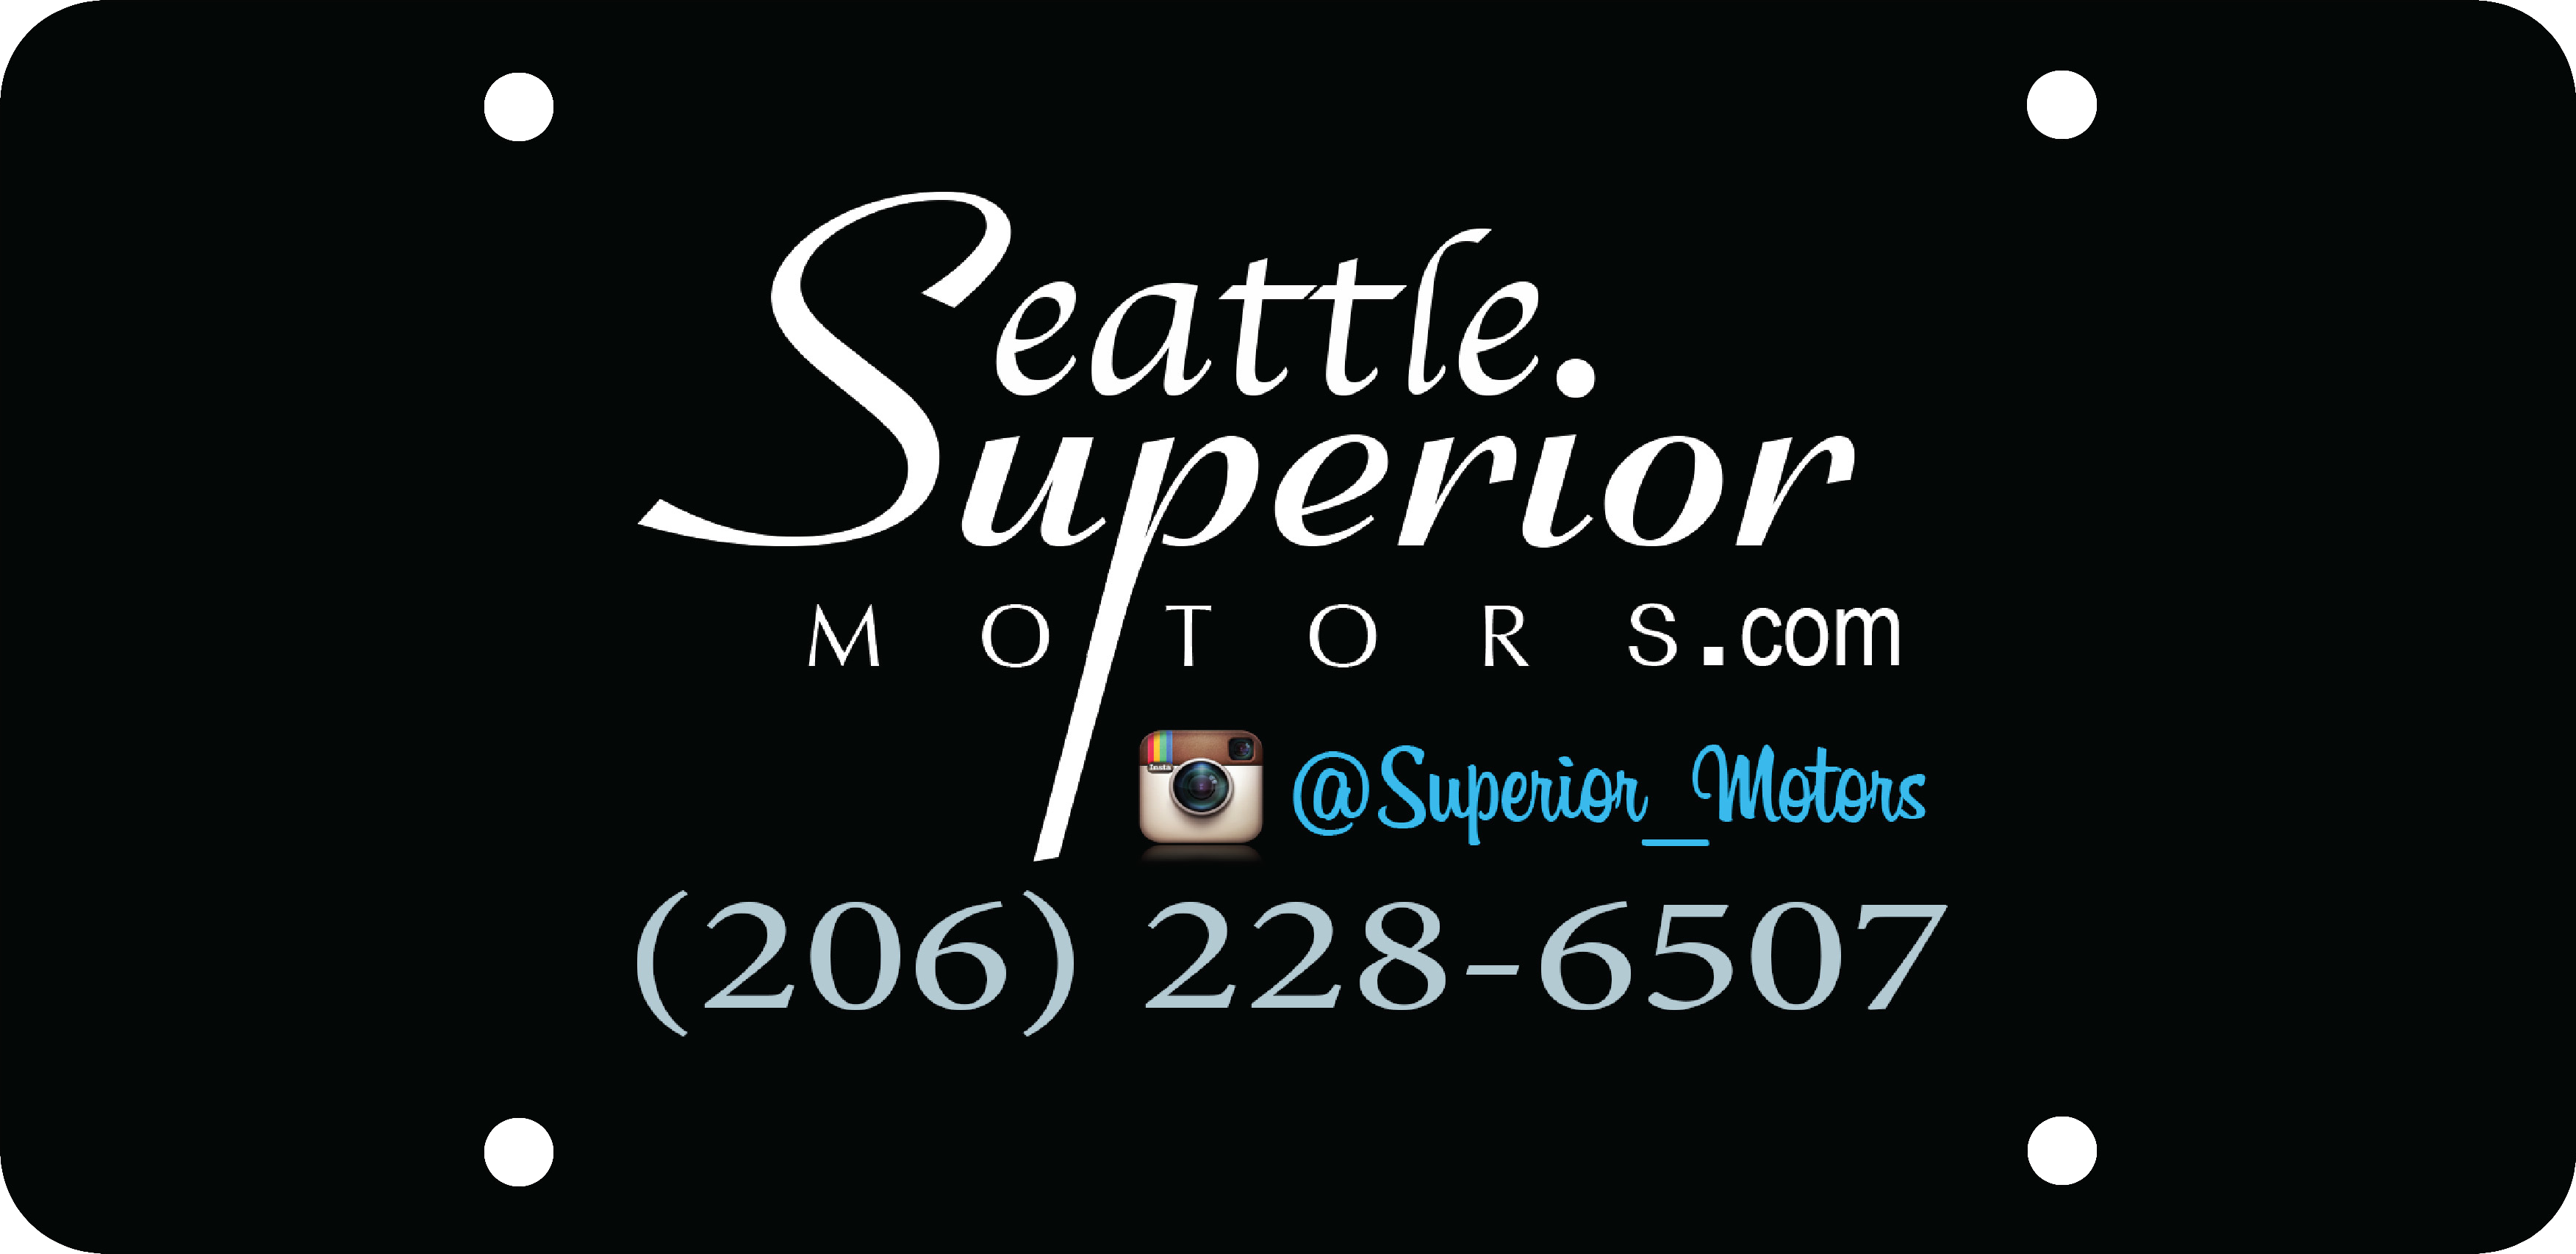 Seattle Superior Motors Digital Insert